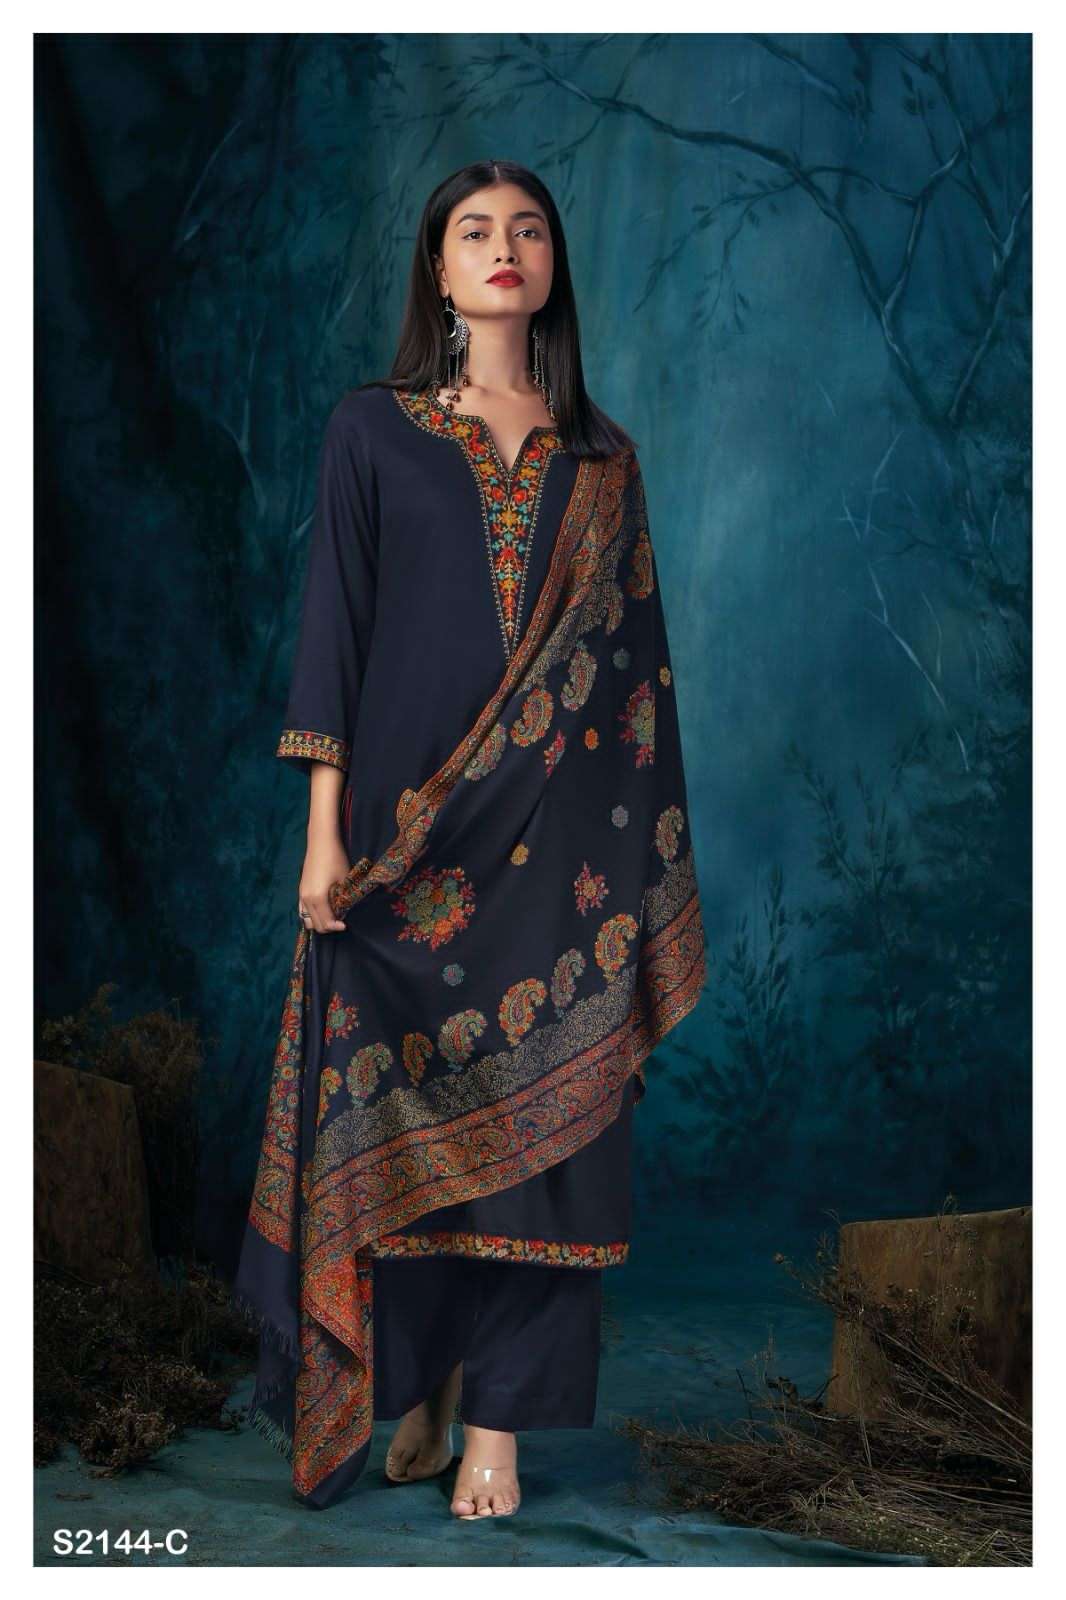 ganga vritti 2144 colour series designer wedding wear pakistani salwar kameez wholesaler surat gujarat